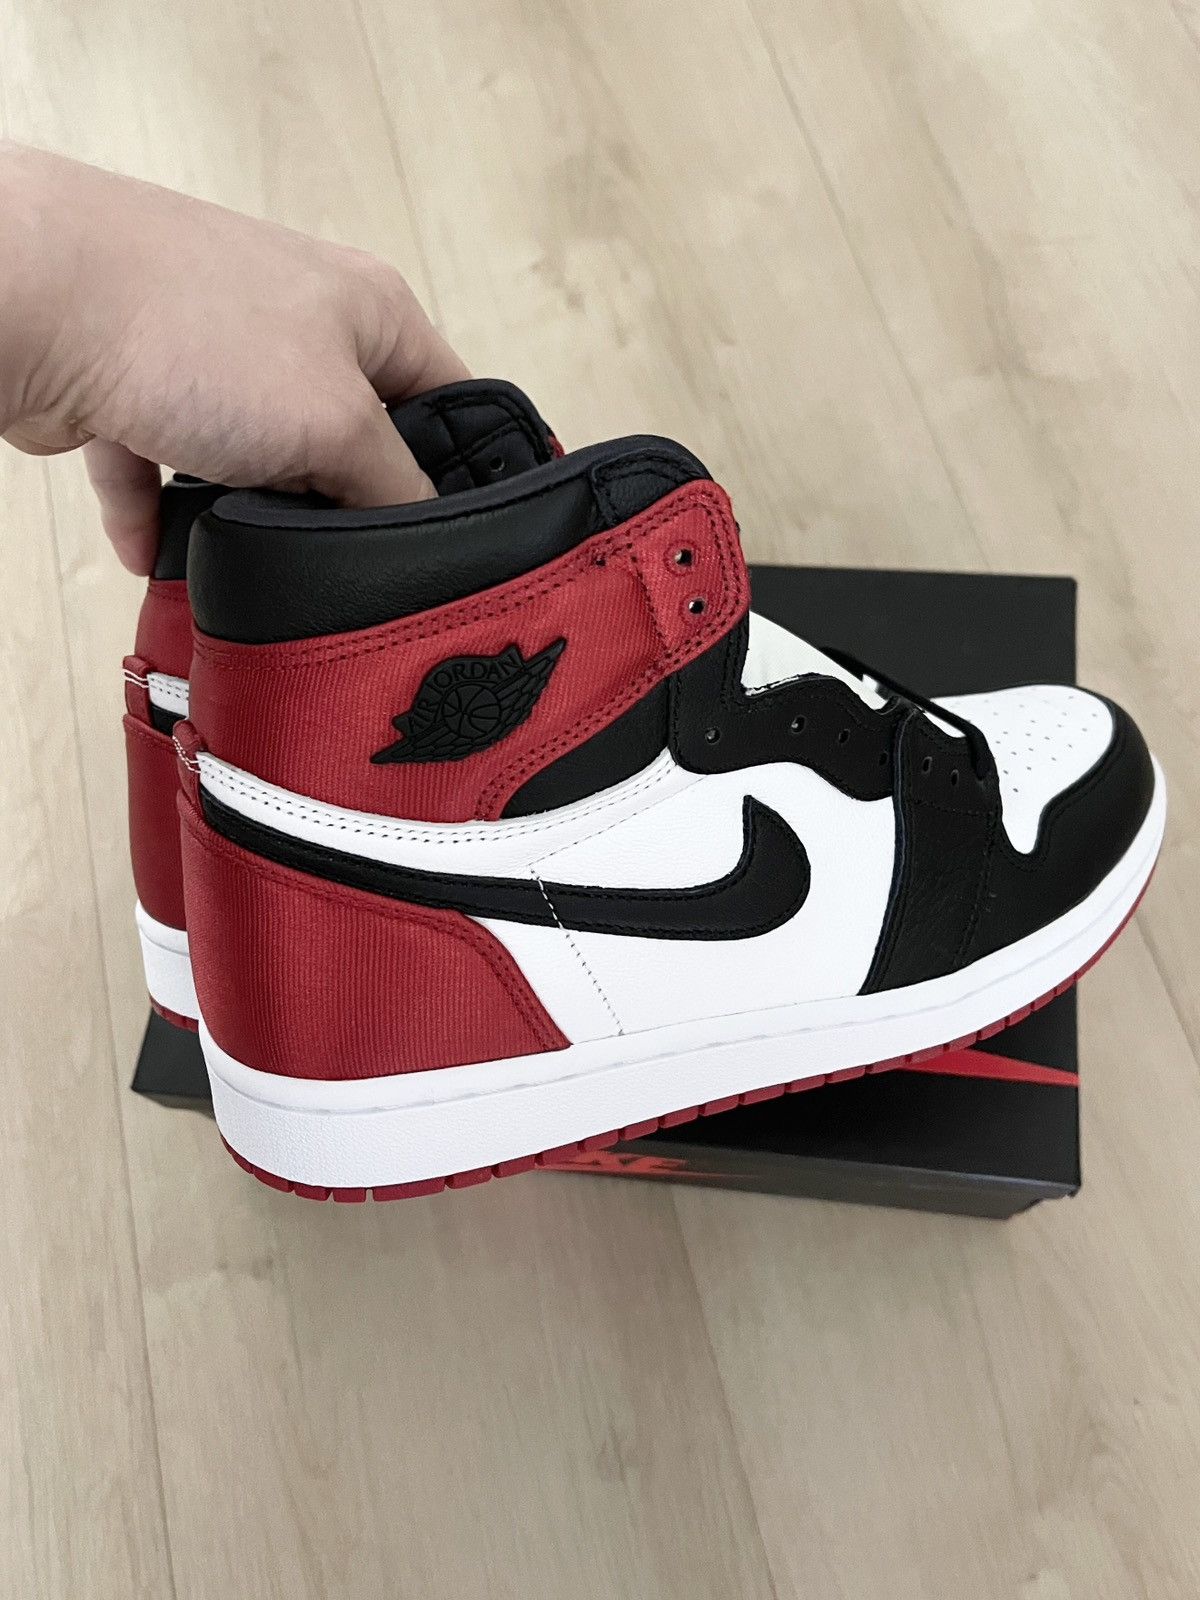 Jordan Brand - 2019 Air Jordan 1 High Saint Black Toe (Men Size 7.5) - 2